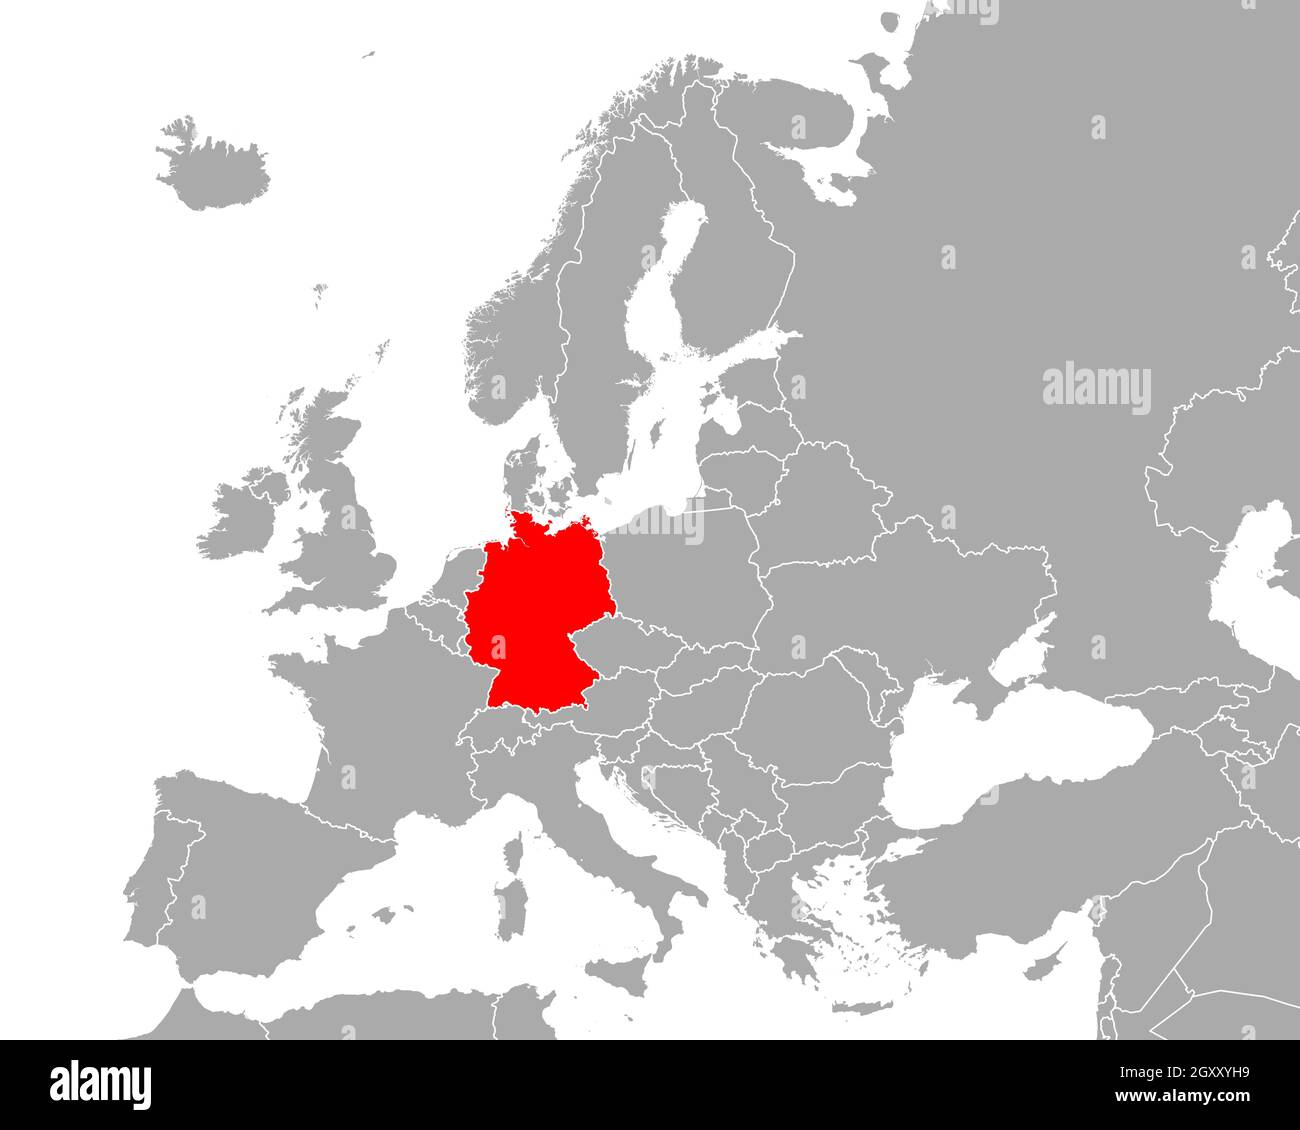 map of europe in deutsch